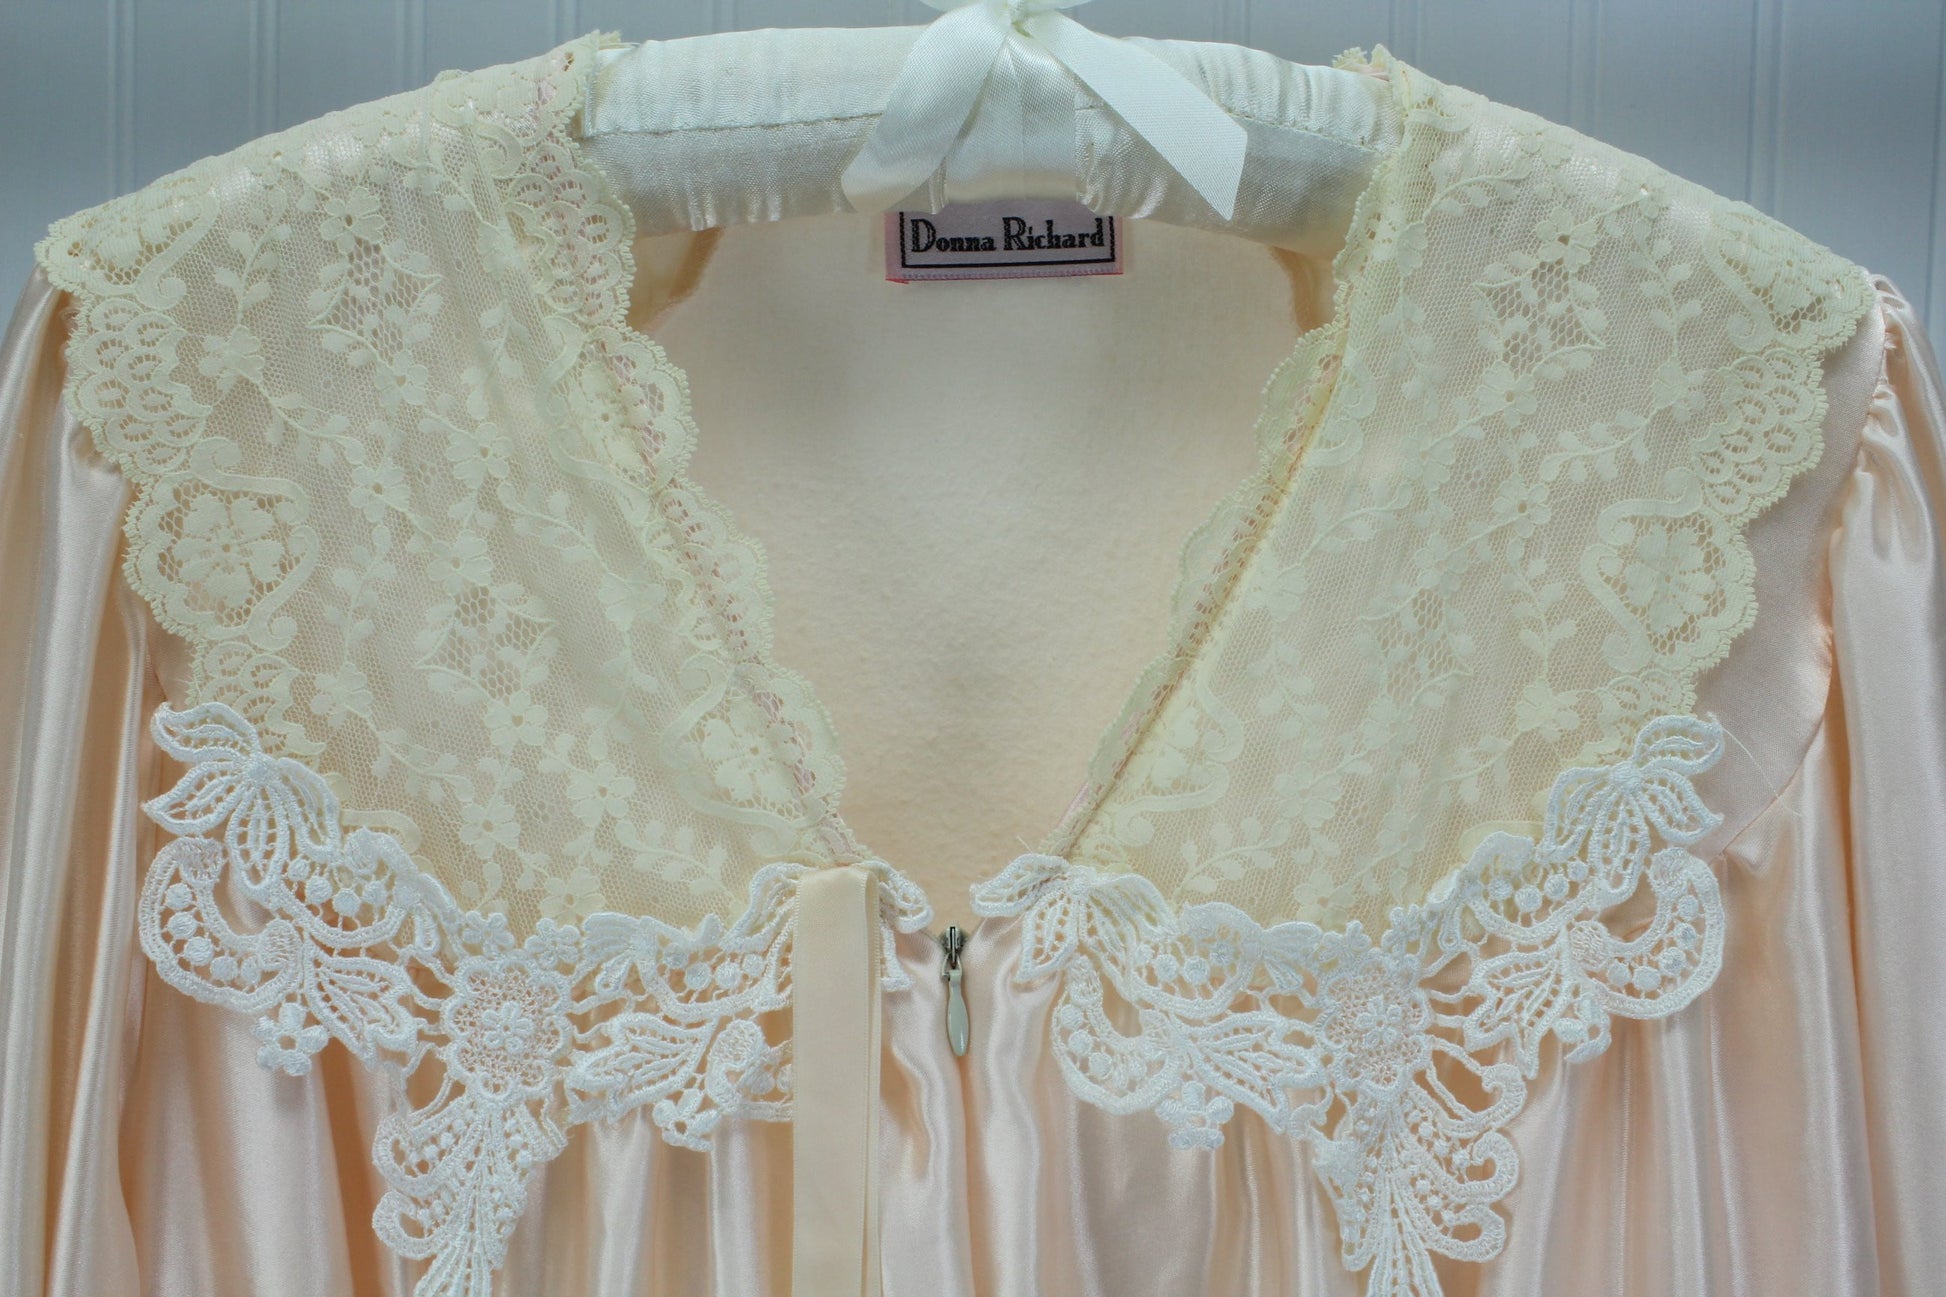 Donna Richard Nightgown Blush Pink Polyester Cotton Lace Collar Size Medium comfortable